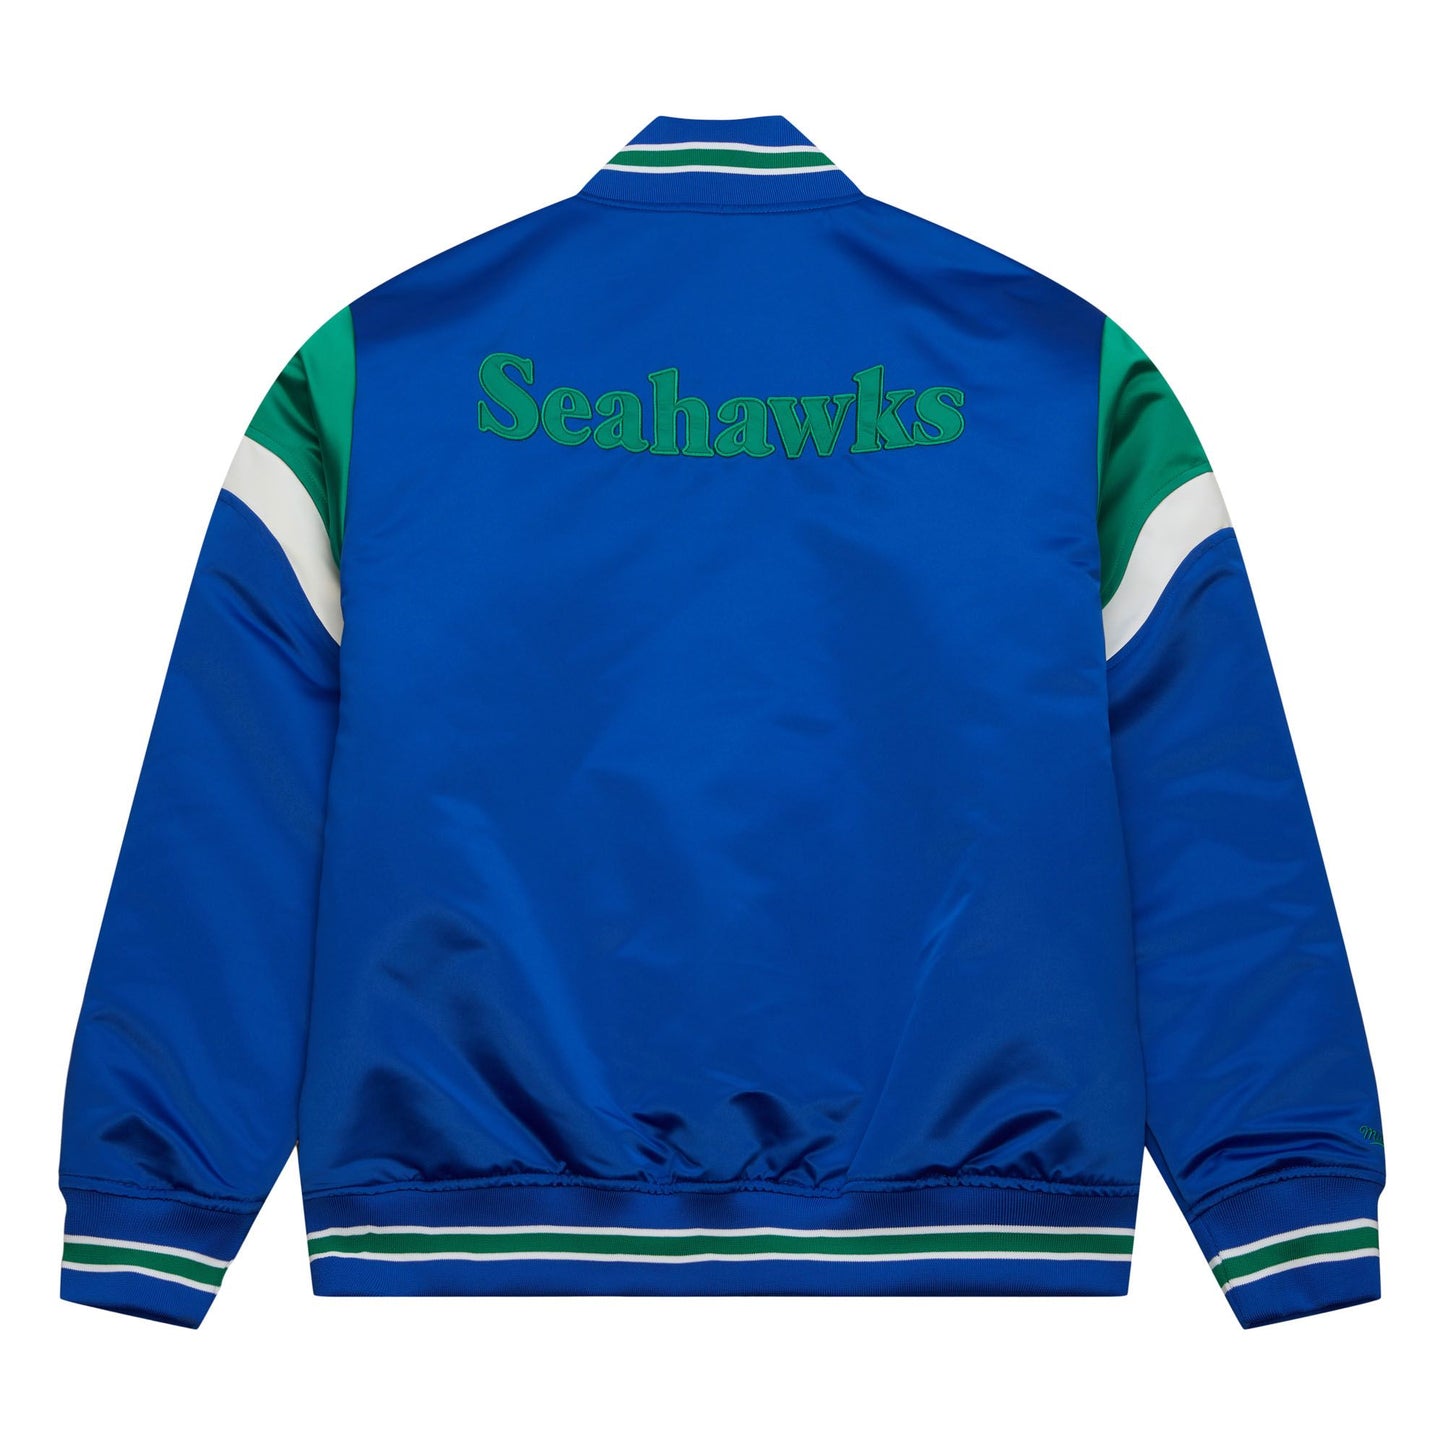 Seahawks Royal Retro Jacket